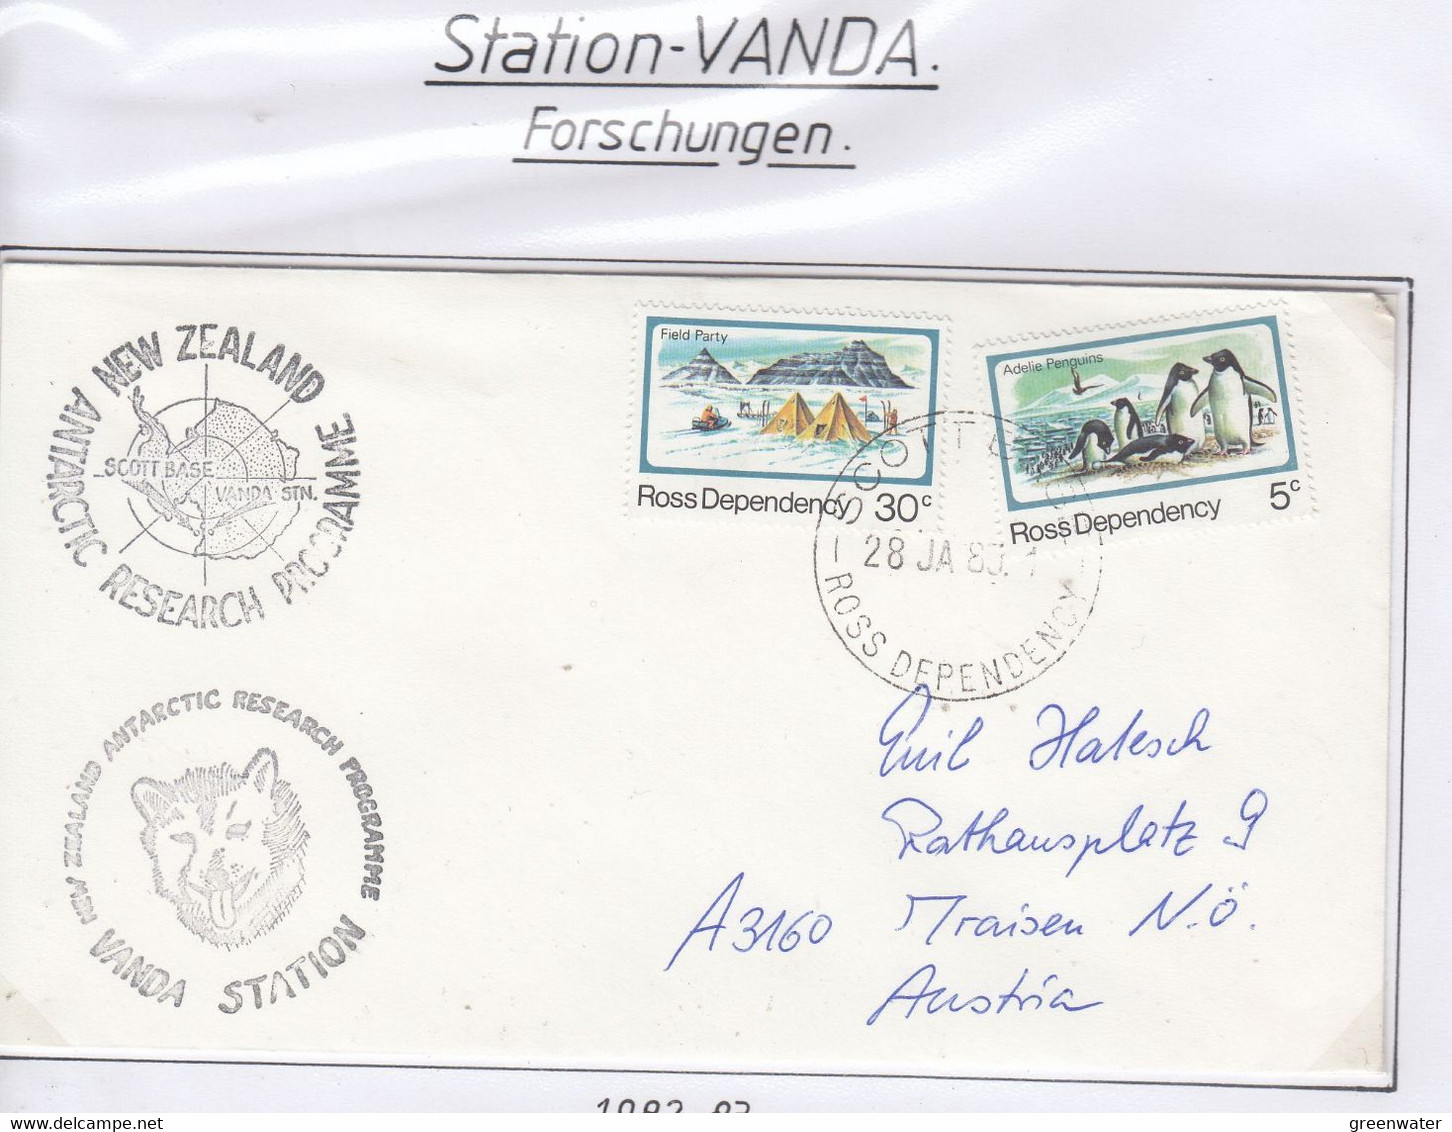 Ross Dependency 1980 Vanda Station  Ca Scott Base 28 JA 80 (CB177B) - Briefe U. Dokumente